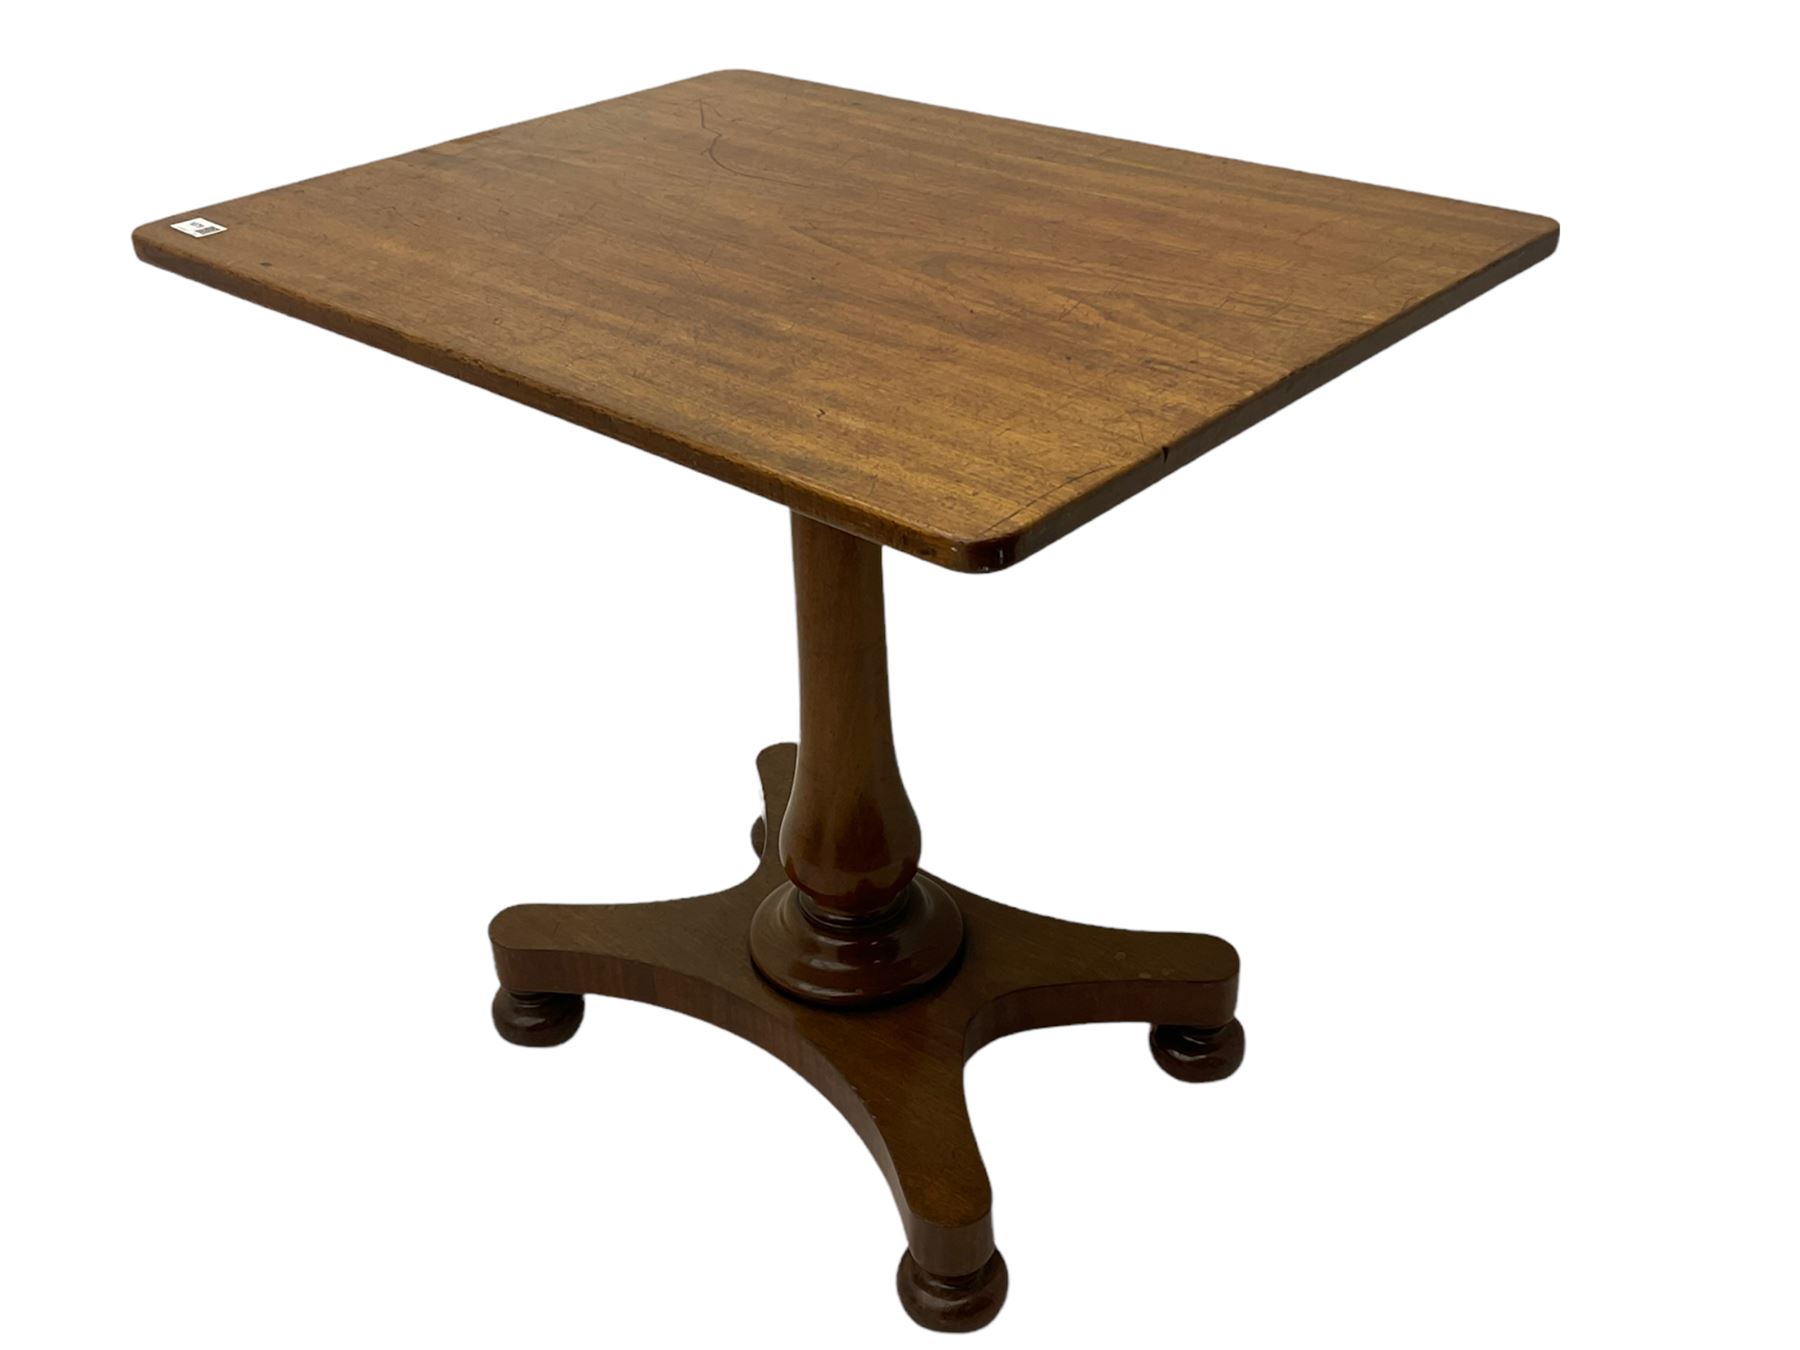 Early 19th century mahogany pedestal table - Image 3 of 5